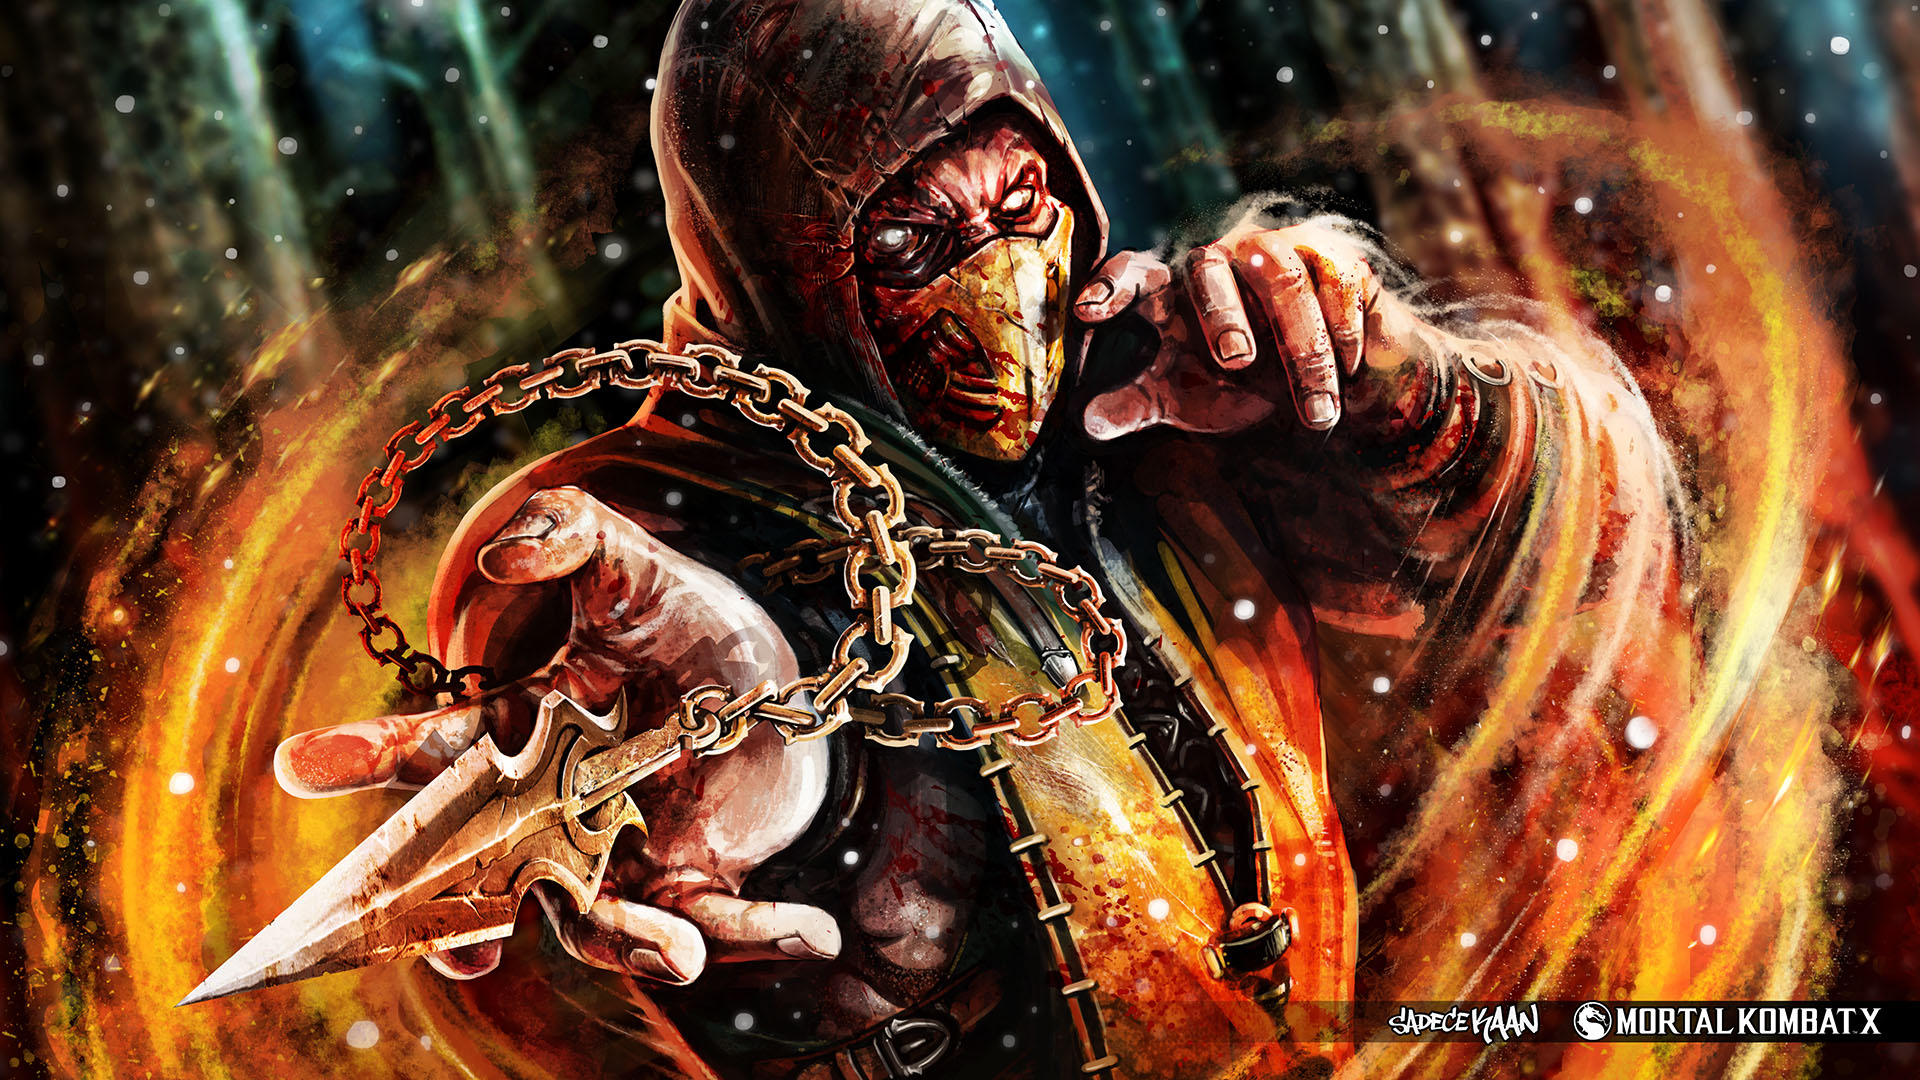 http://www.game-art-hq.com/wp-content/uploads/2014/06/Scorpion-from-Mortal-Kombat-X-Badass-Fan-Art.jpg